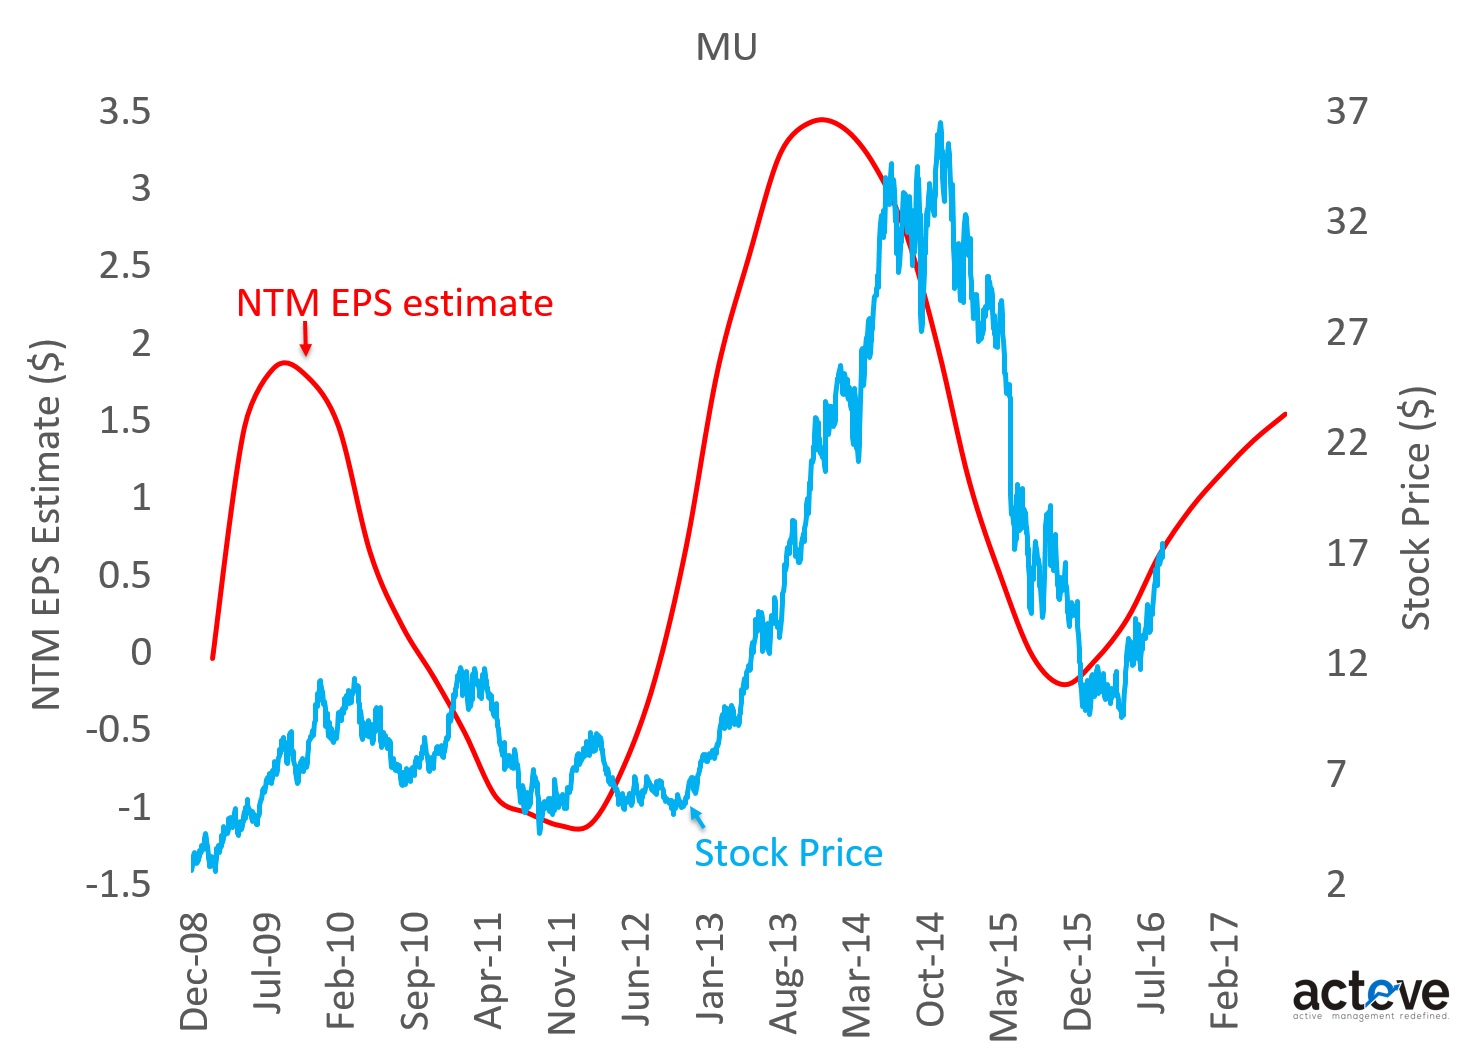 MU stock vs. NTM EPS estimates 090916